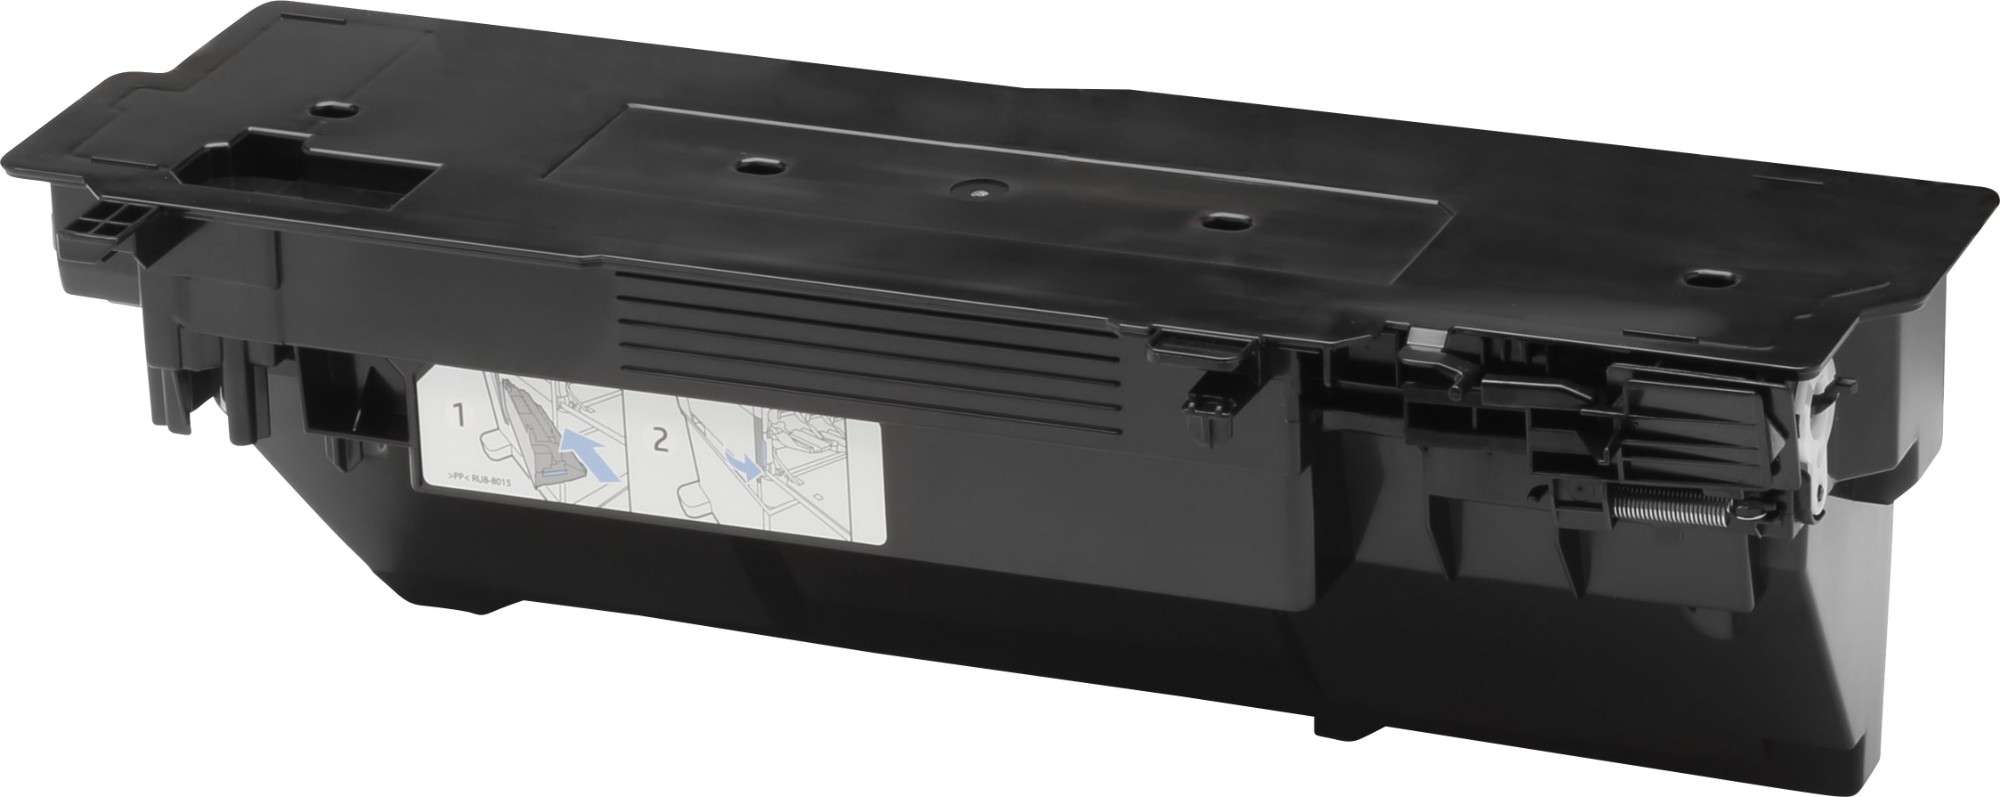 Original HP 3WT90A Waste Toner Collection Unit